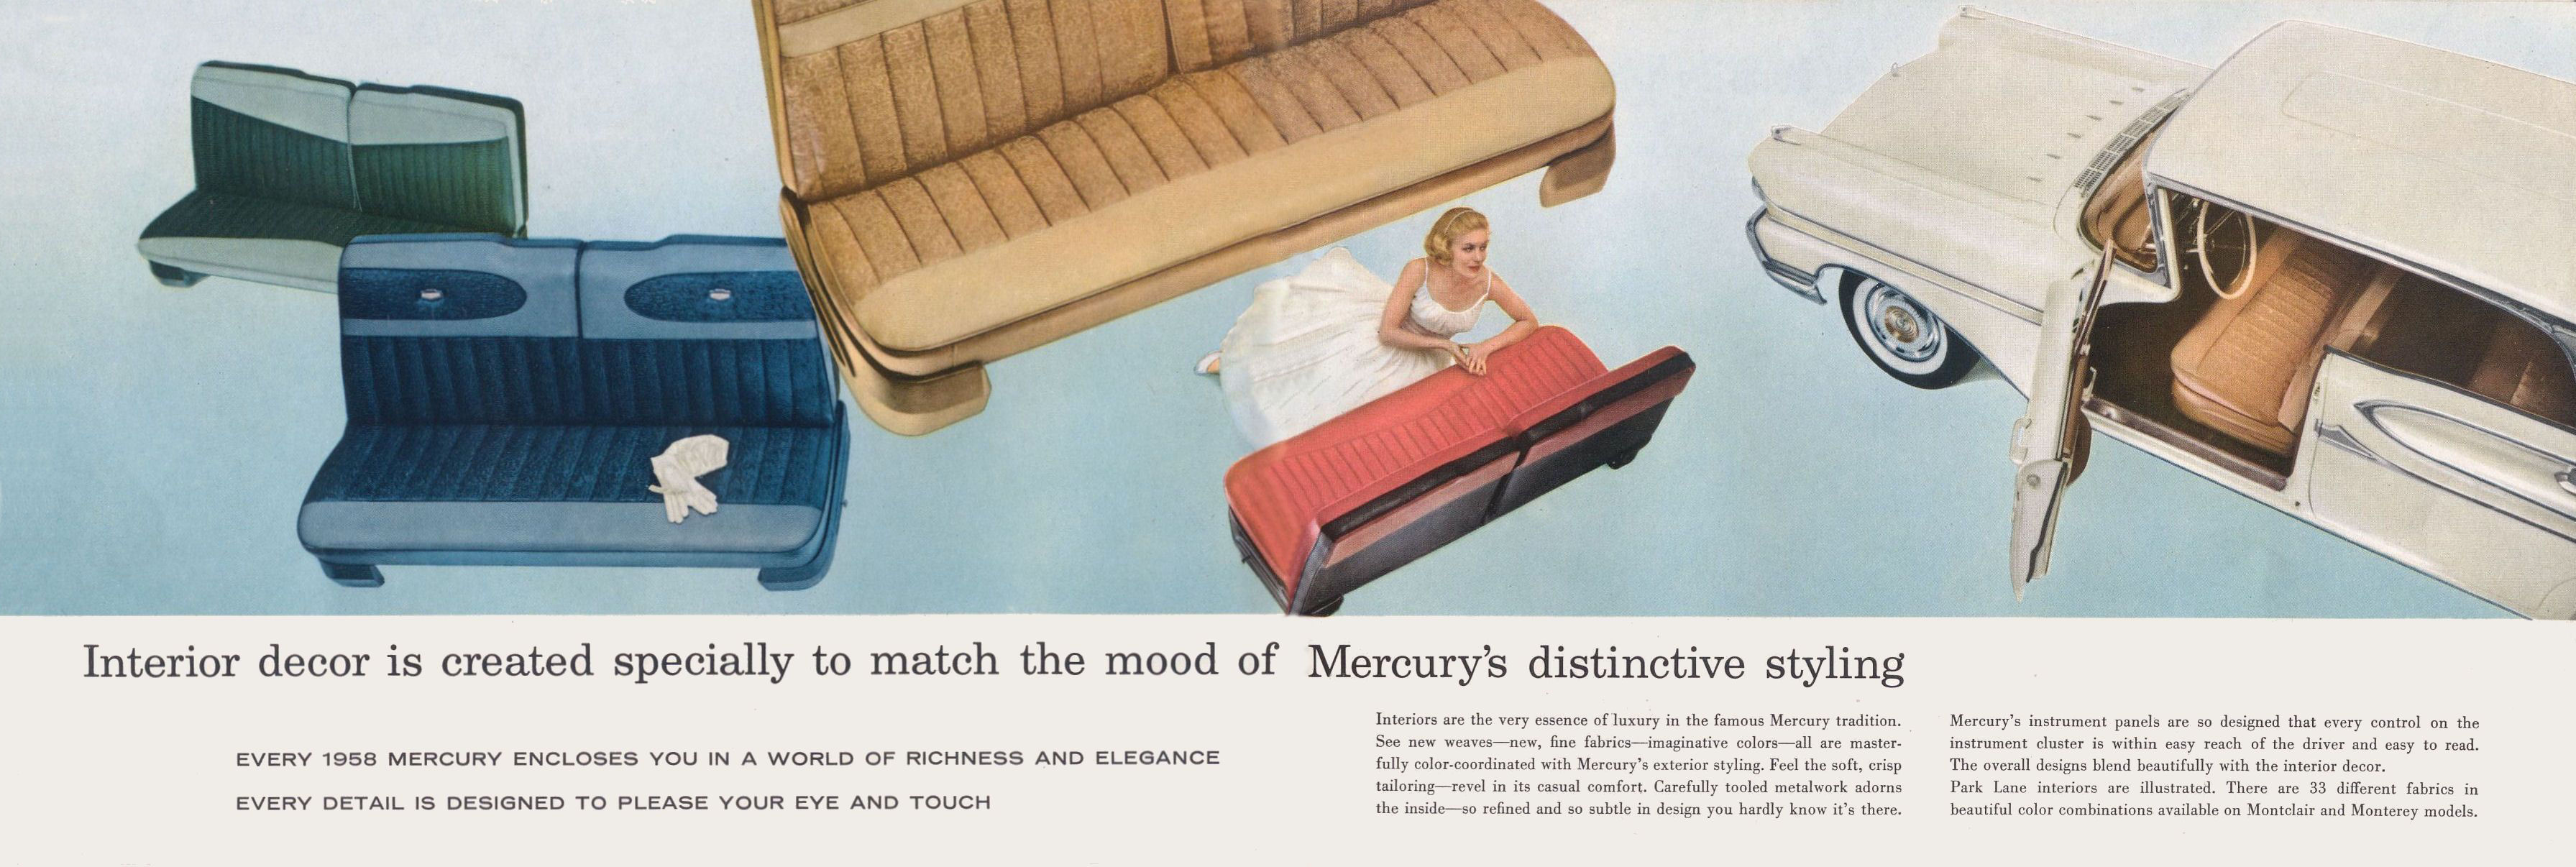 1958 Mercury Brochure Page 3